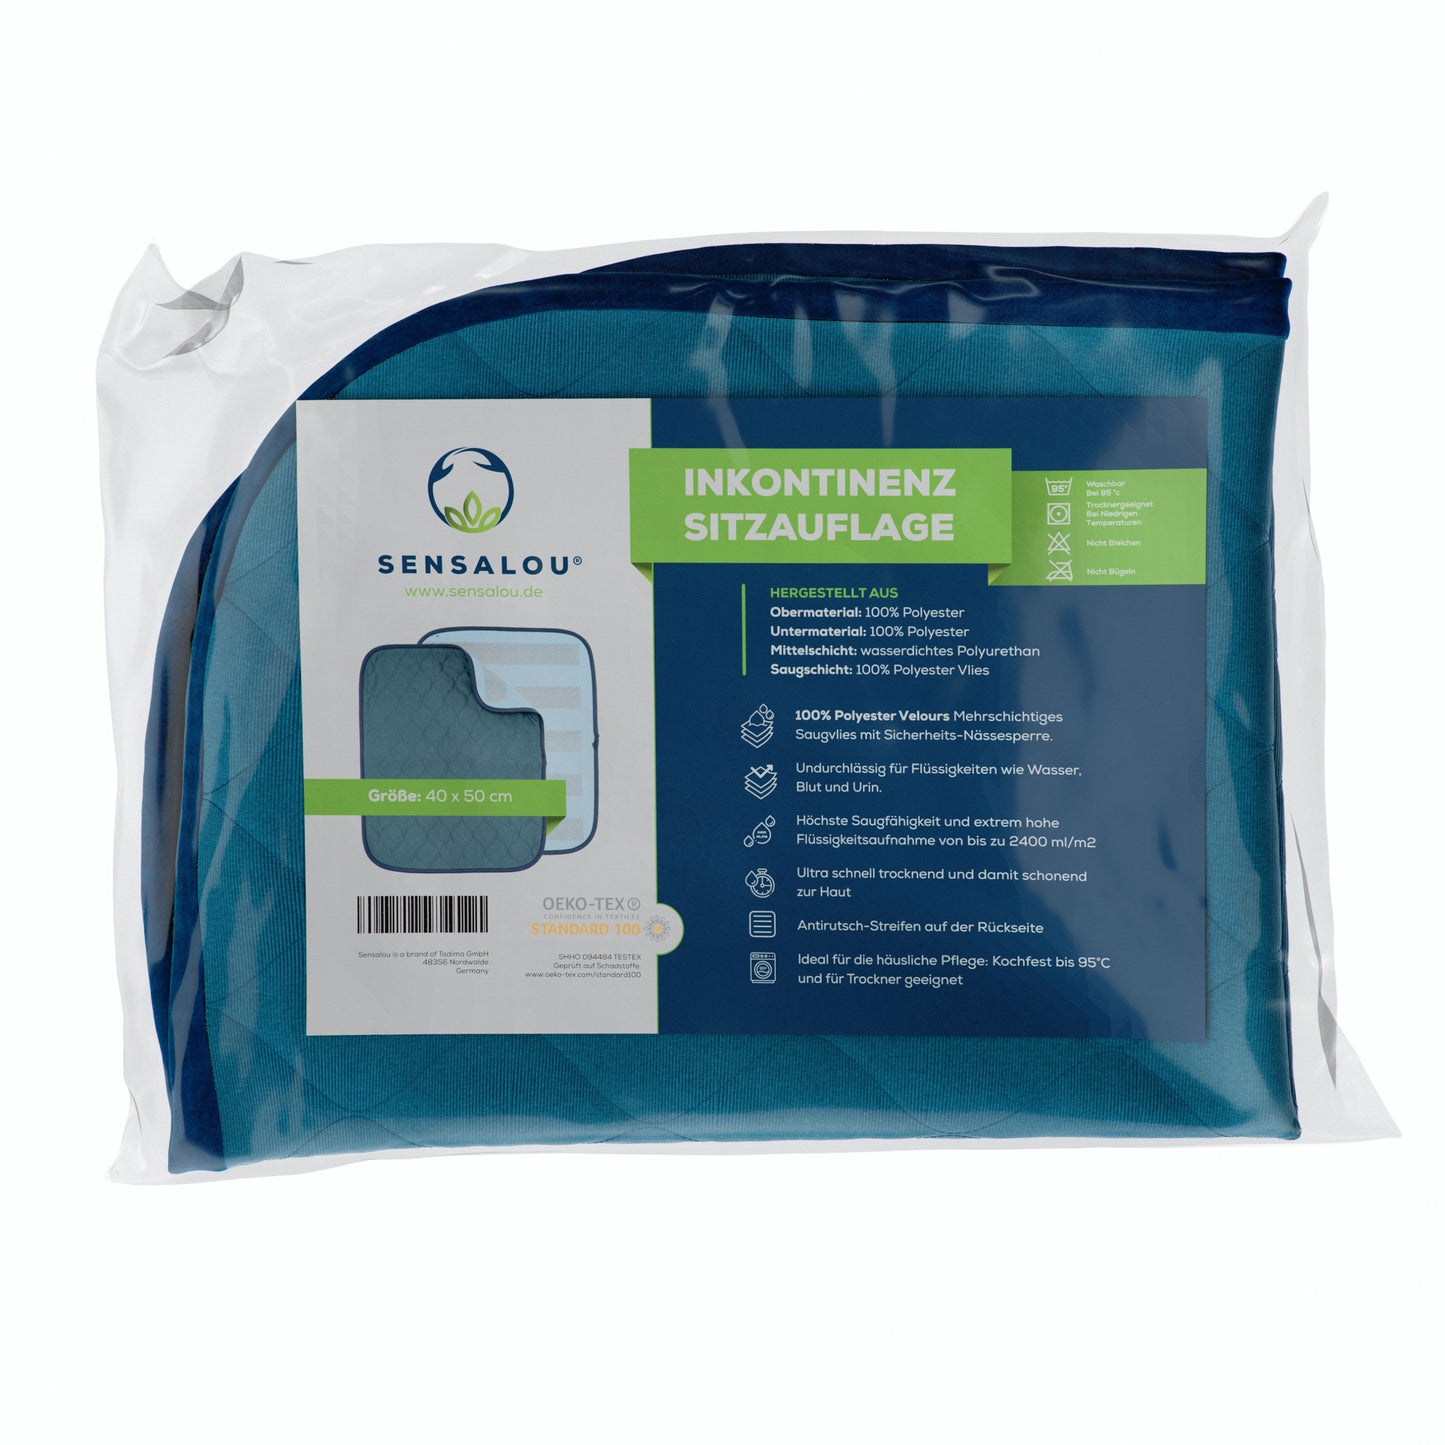 Sensalou incontinence chair pad waterproof